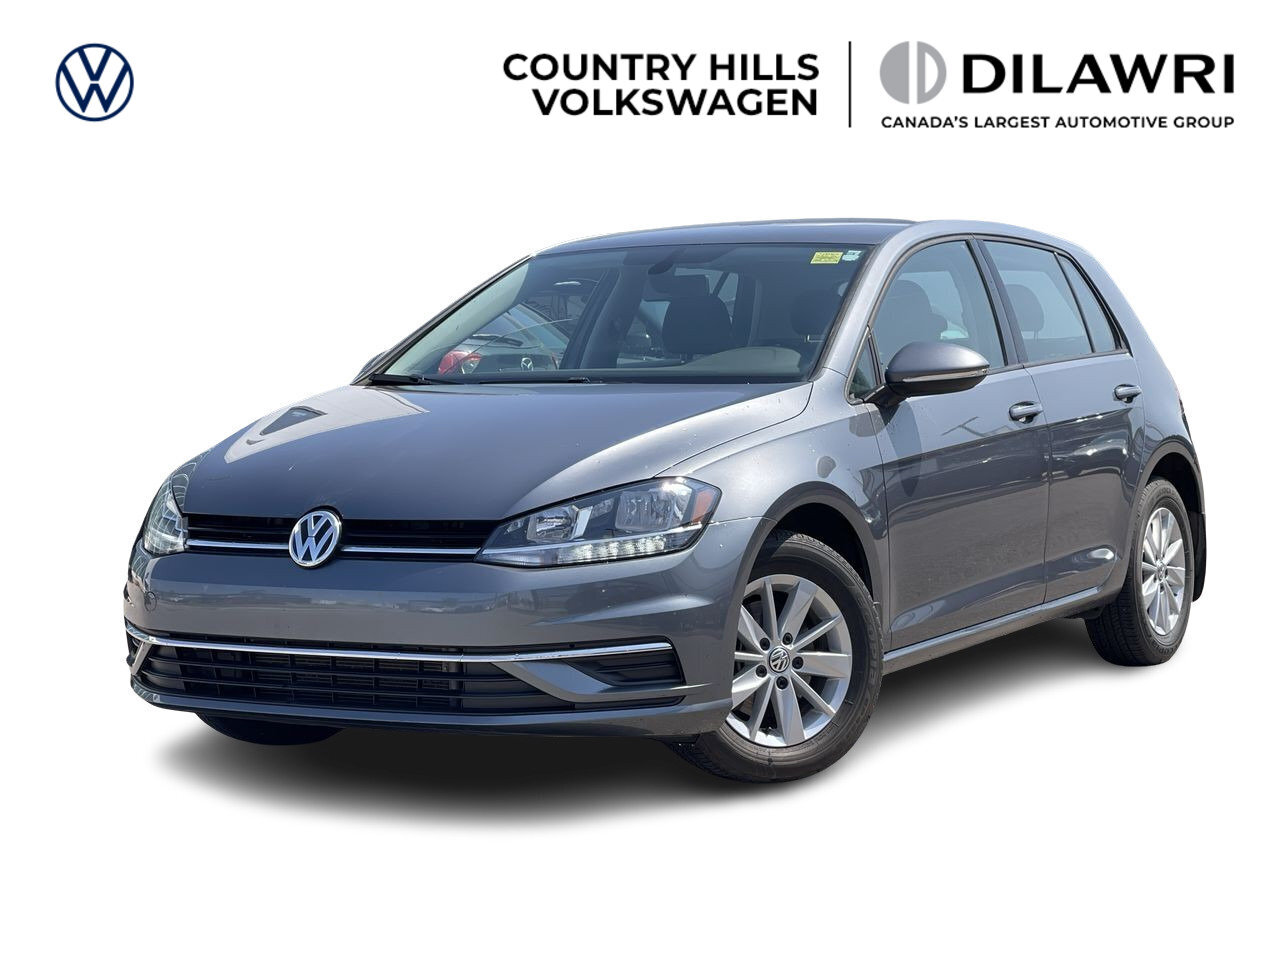 2019 Volkswagen Golf Comfortline, 1.4L TSI Certified Pre-Owned, Locally